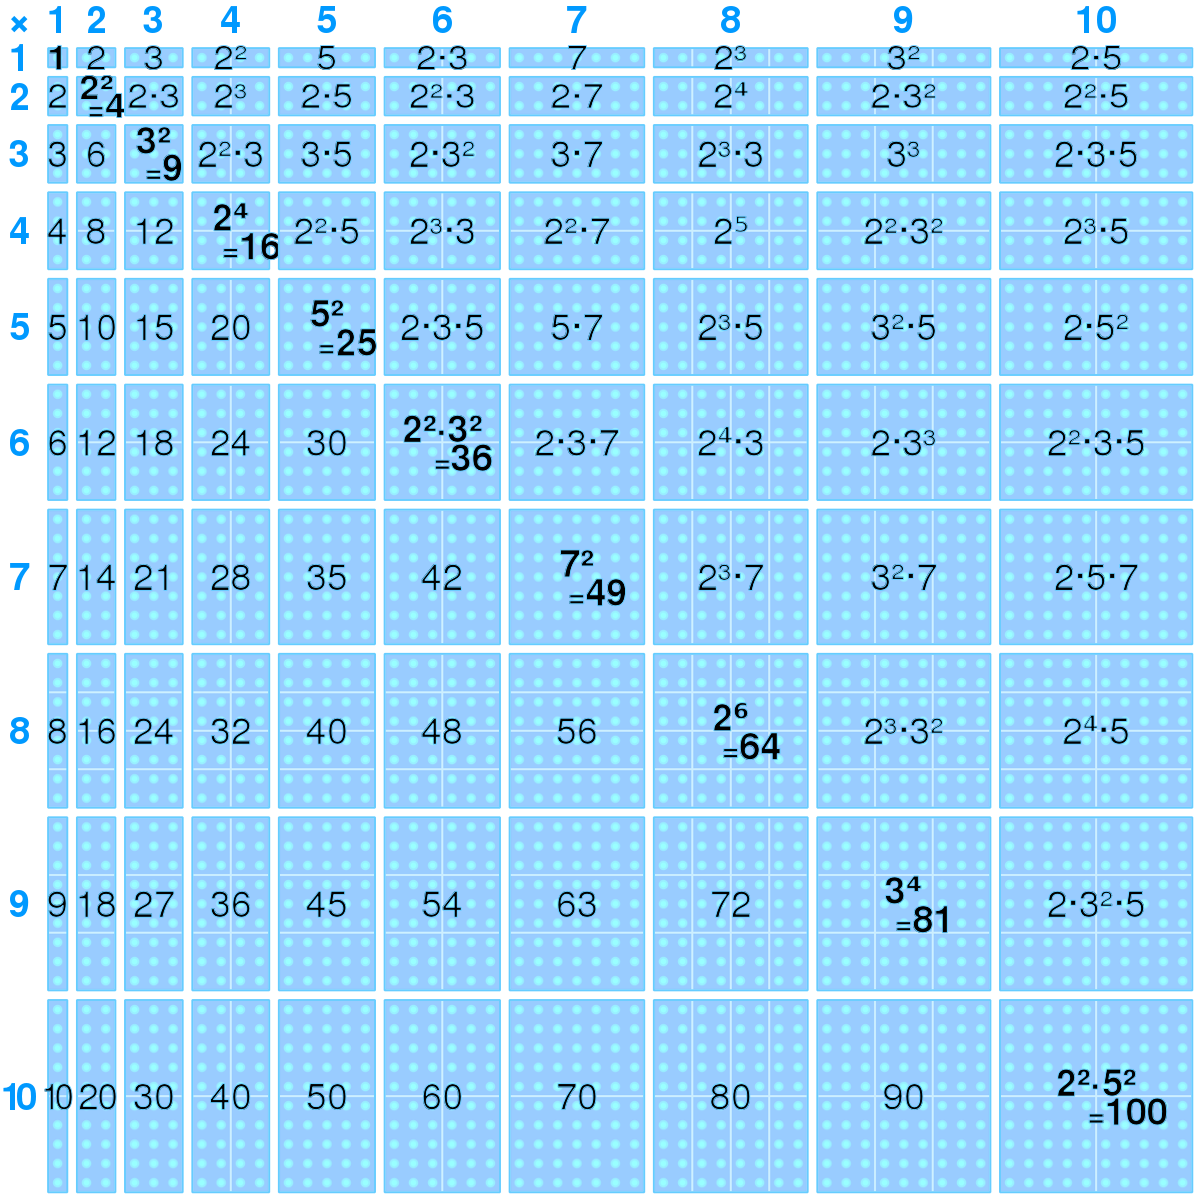 Multiplication Table - Wikipedia